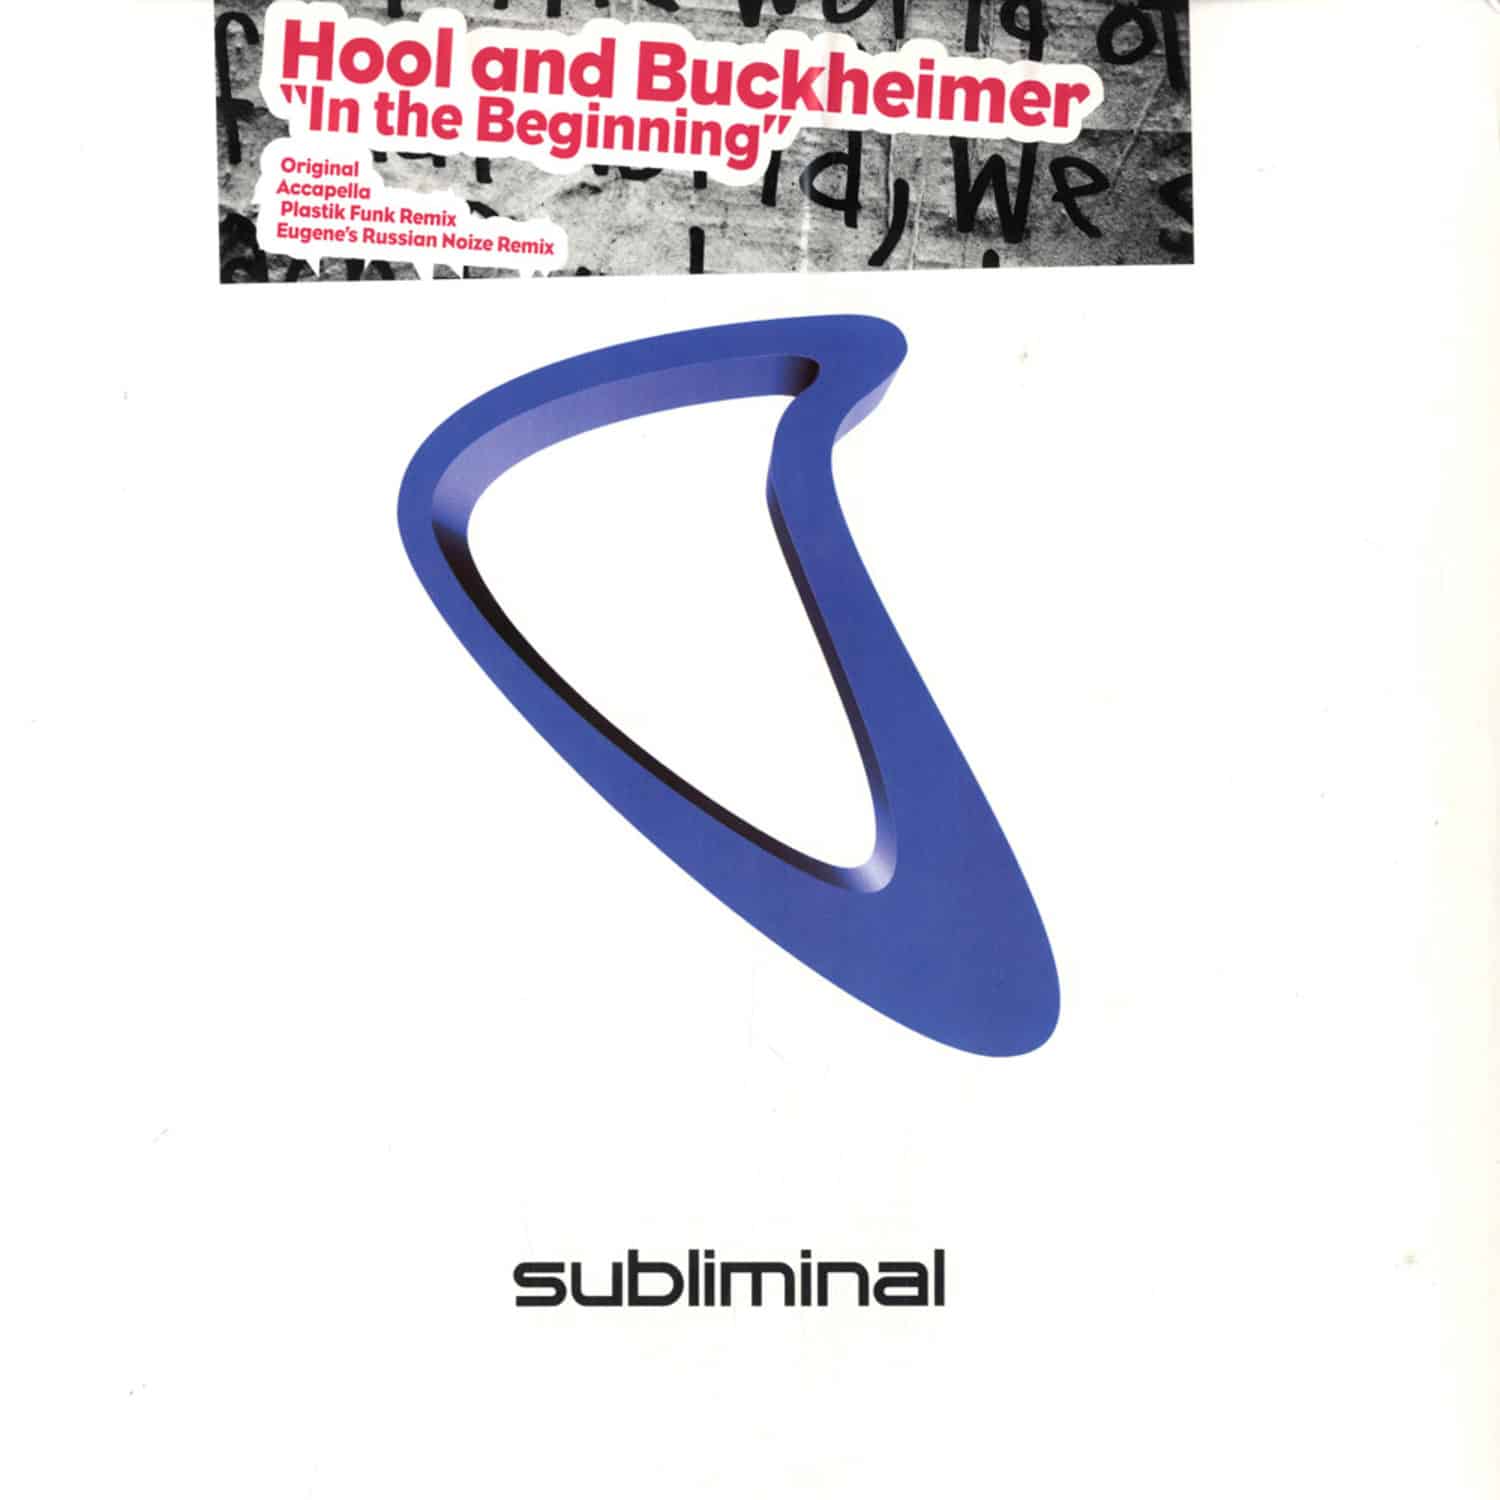 Hool and Buckheimer - IN THE BEGINNING